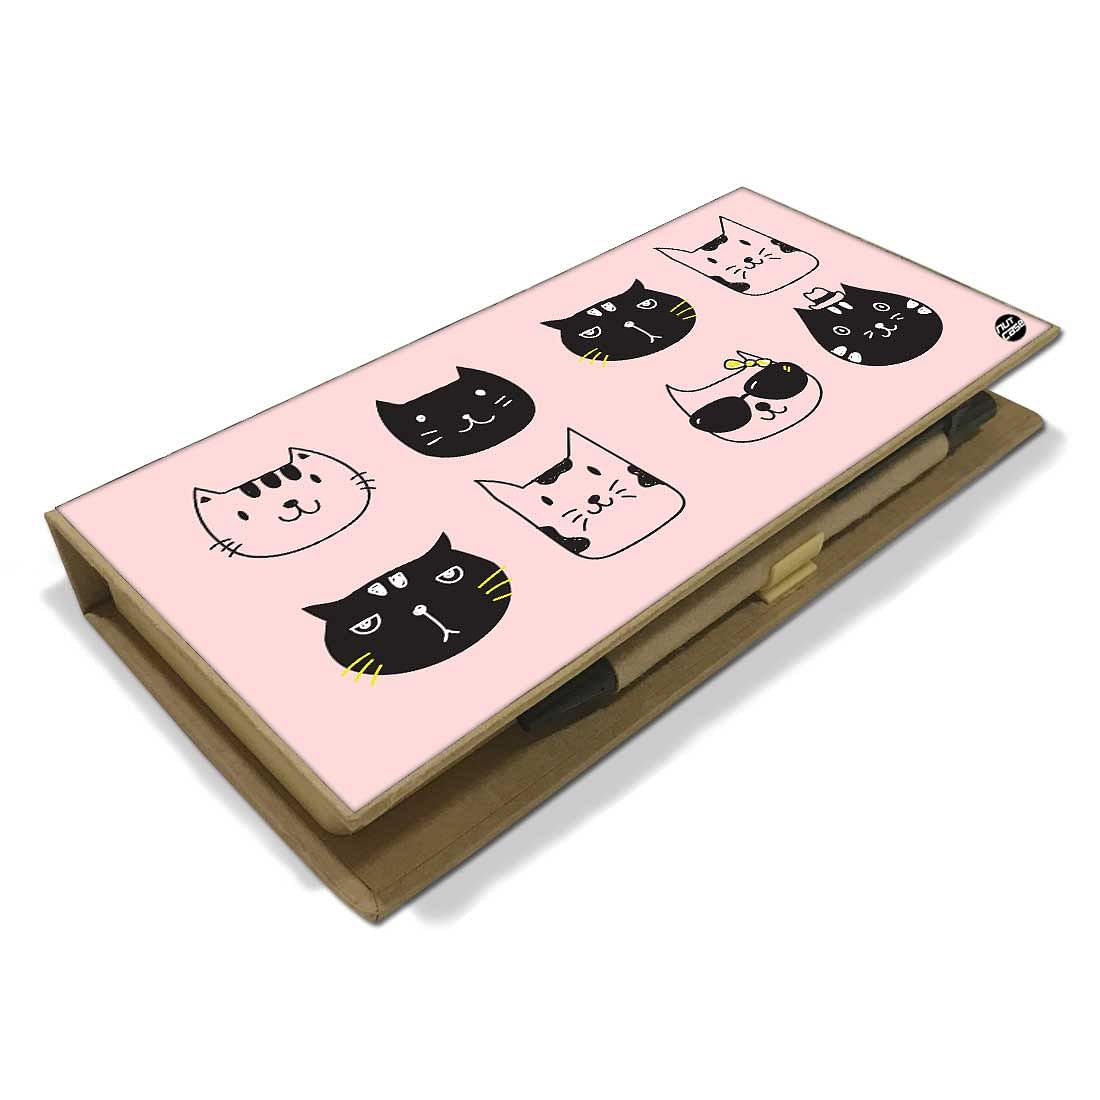 Stationery Kit Desk Organizer Memo Notepad - Cute Cats Kitty Nutcase